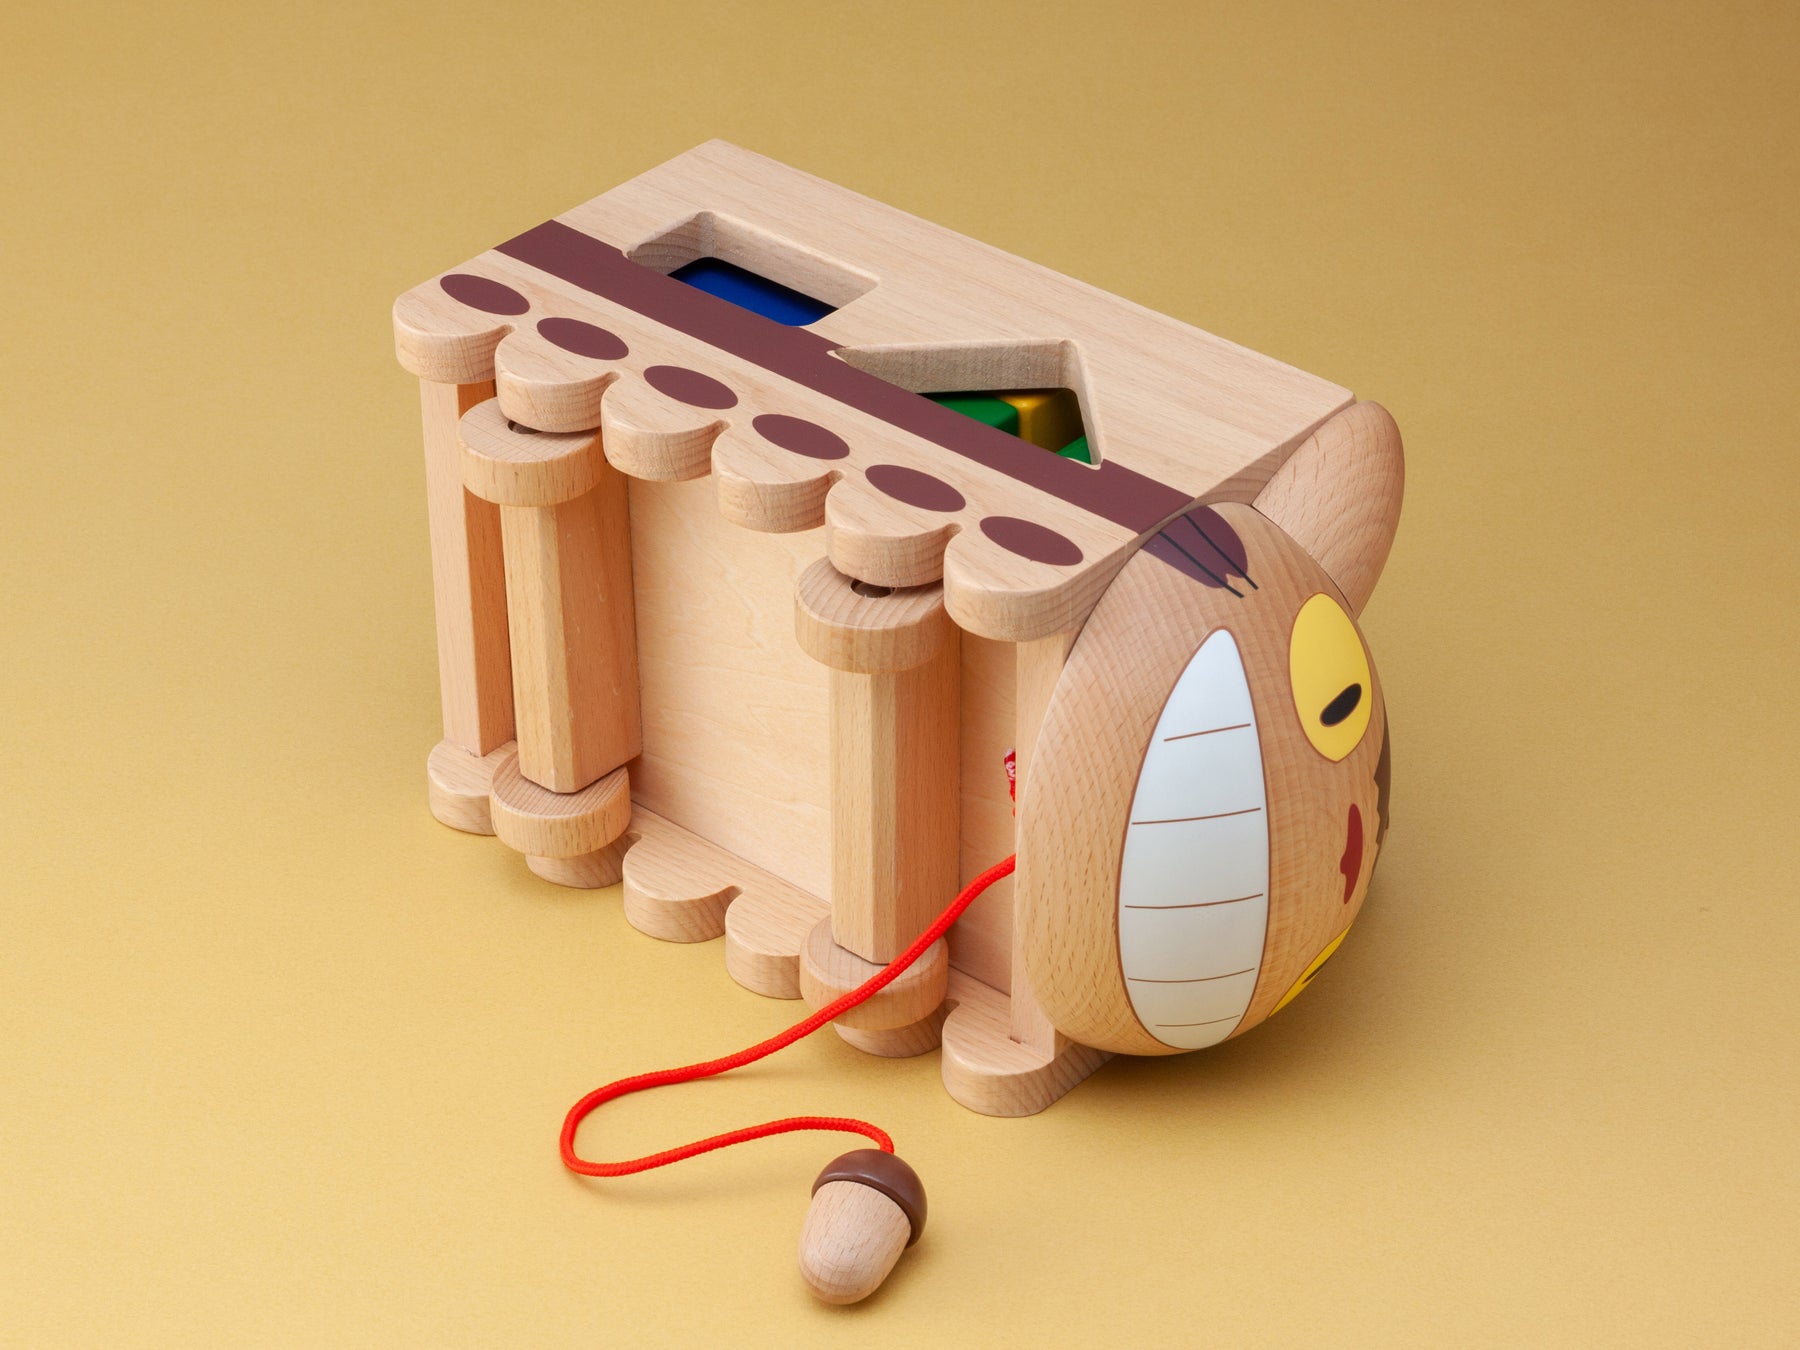  Cat Bus Building Blocks Set, TotoreCat Model Toys for